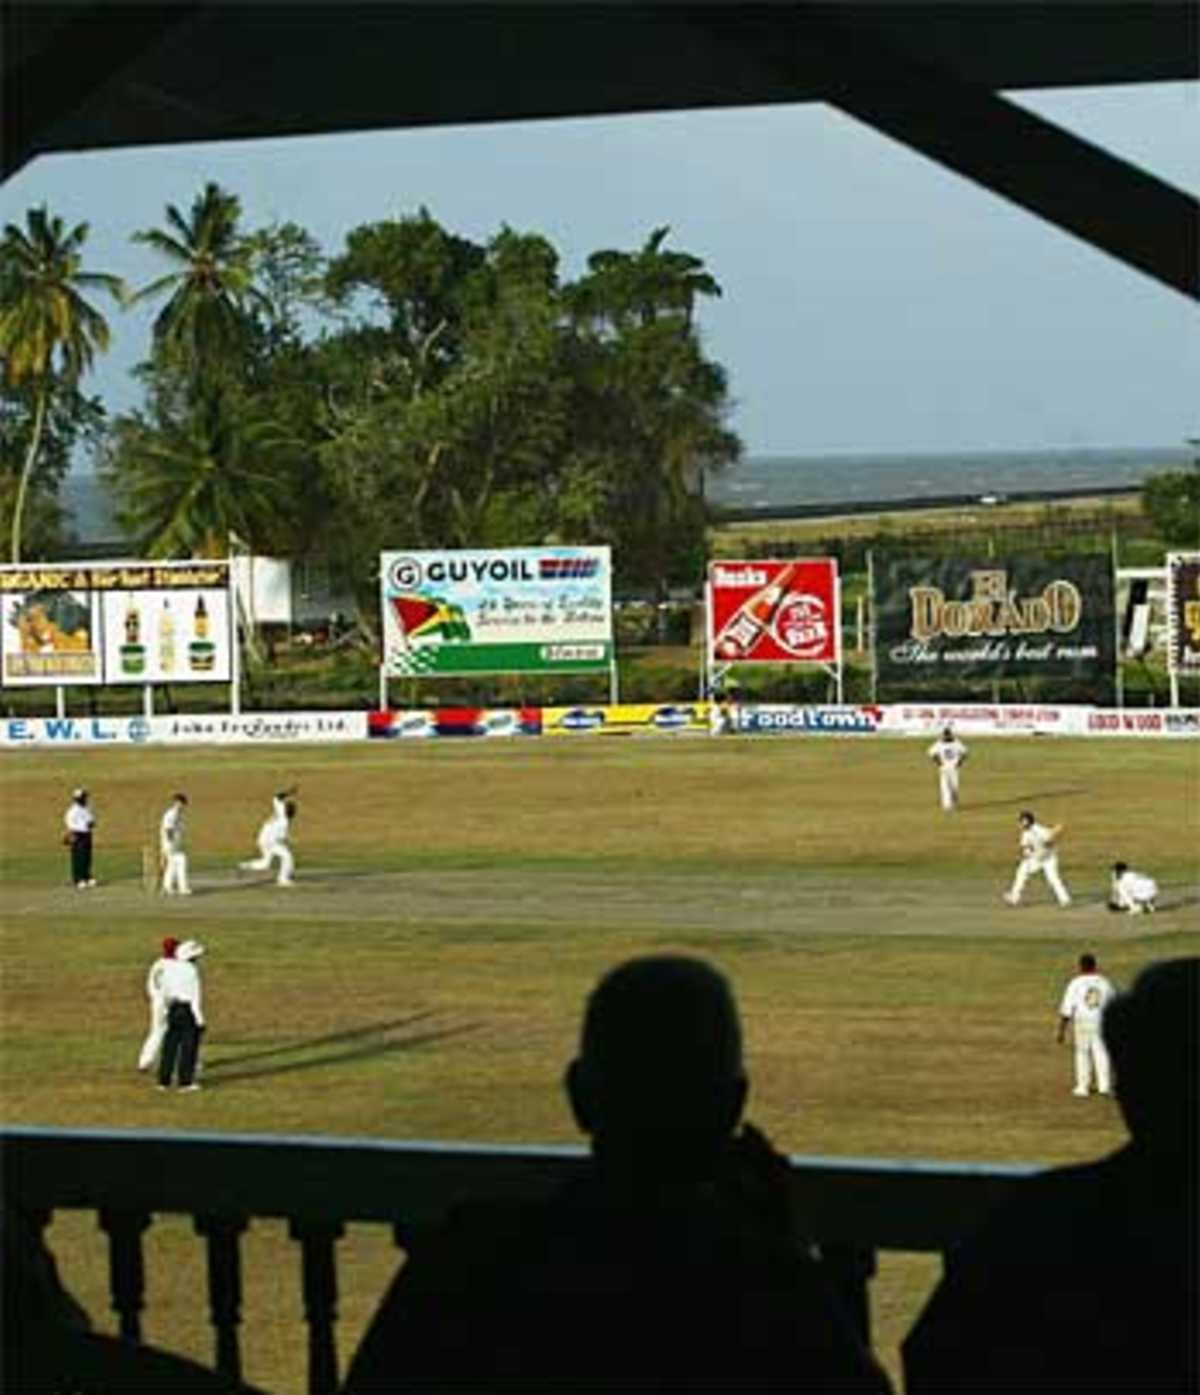 Everest Cricket Club, Guyana